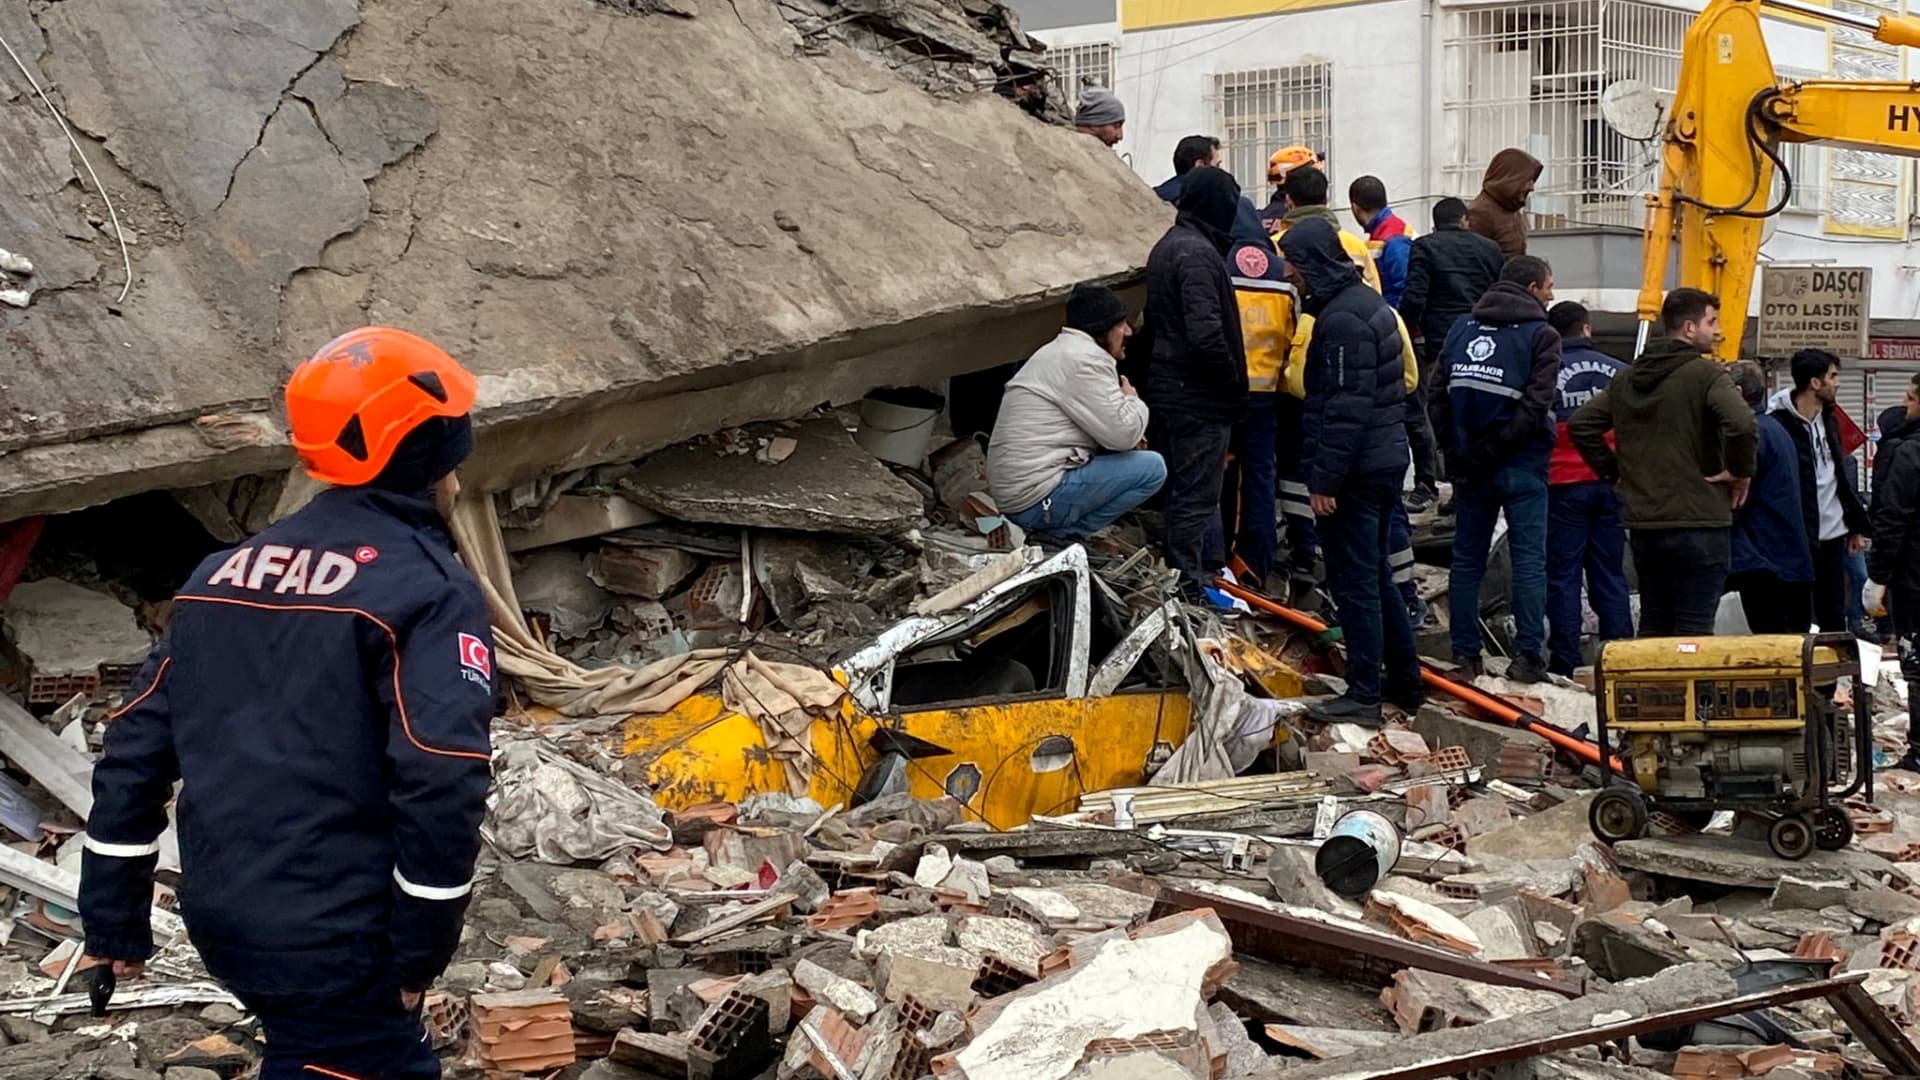 People search through rubble following an earthquake in Diyarbakir, Turkey February 6, 2023.